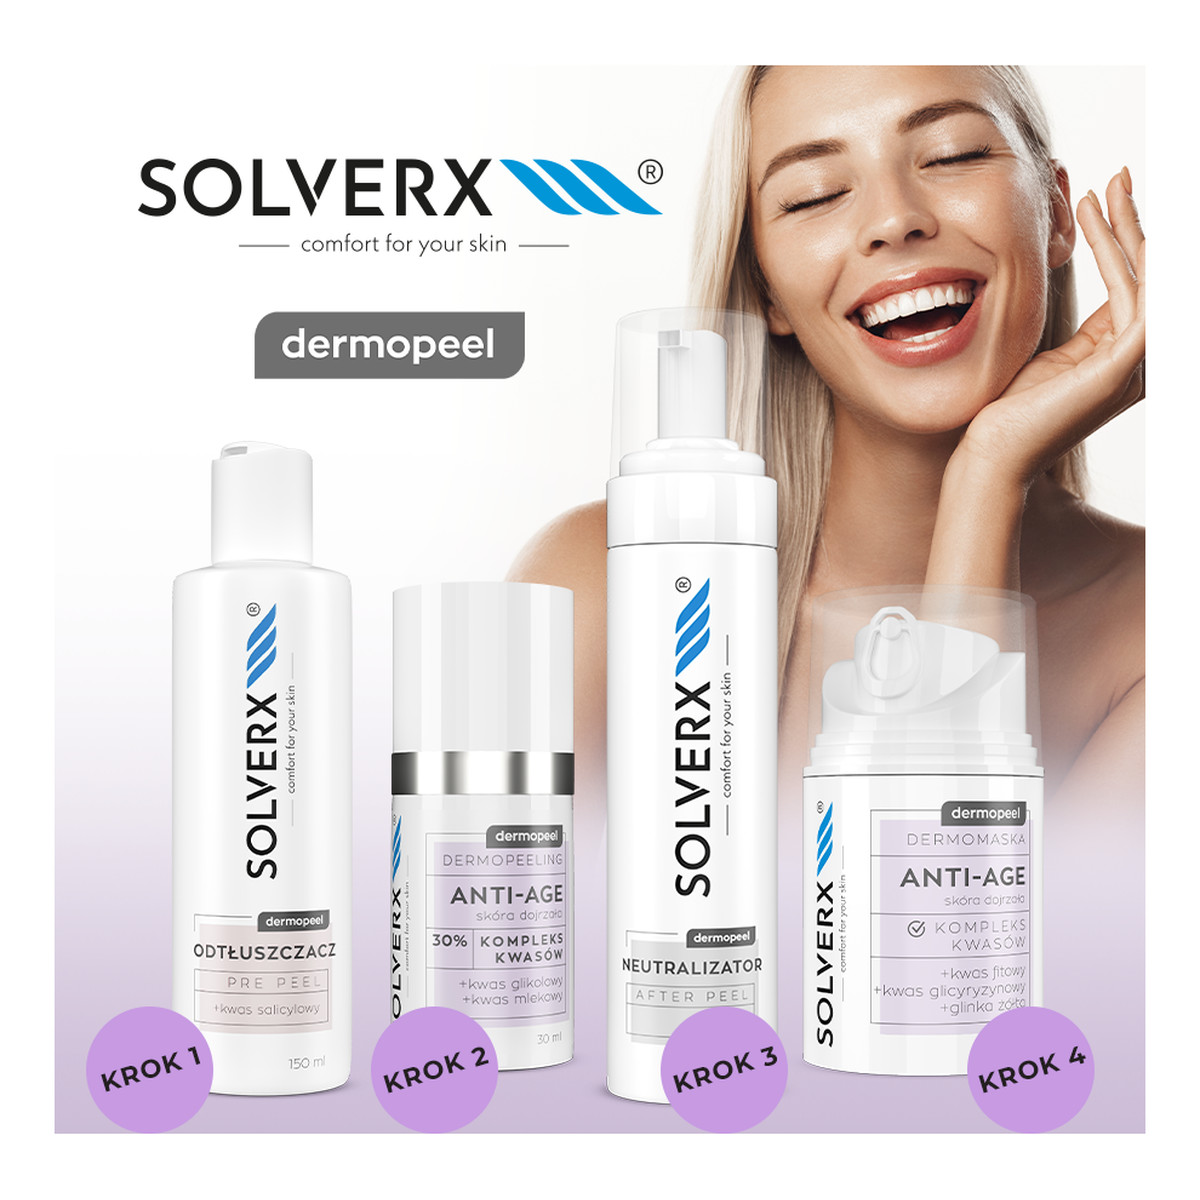 Solverx Dermopeel Dermopeeling Anti-Age - Kompleks Kwasów 30% (glikolowy, mlekowy) 30ml